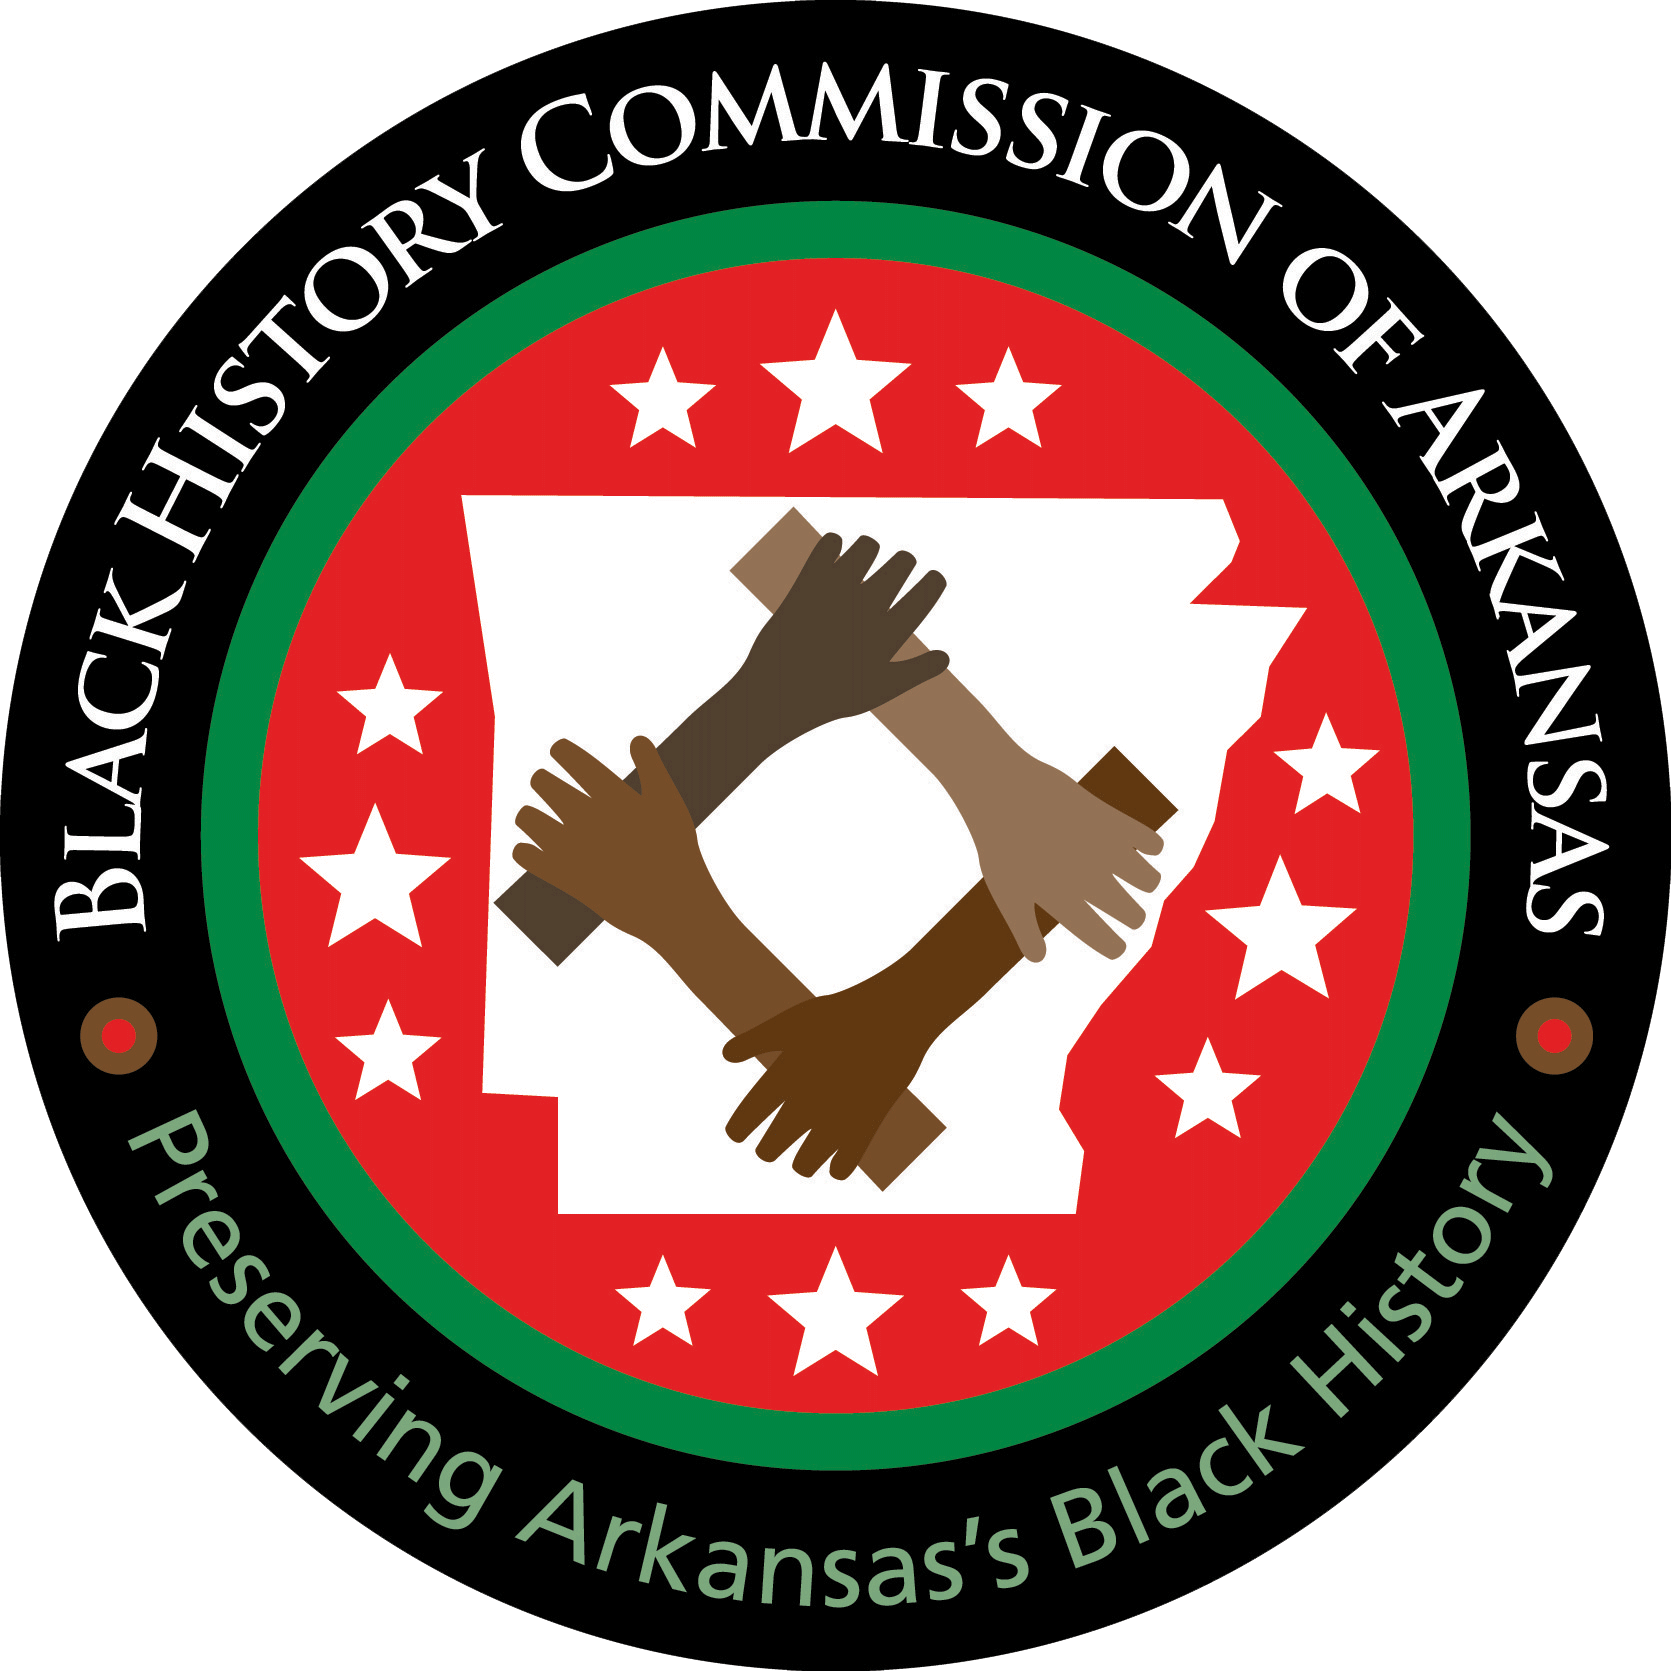 Black History Commission of Arkansas